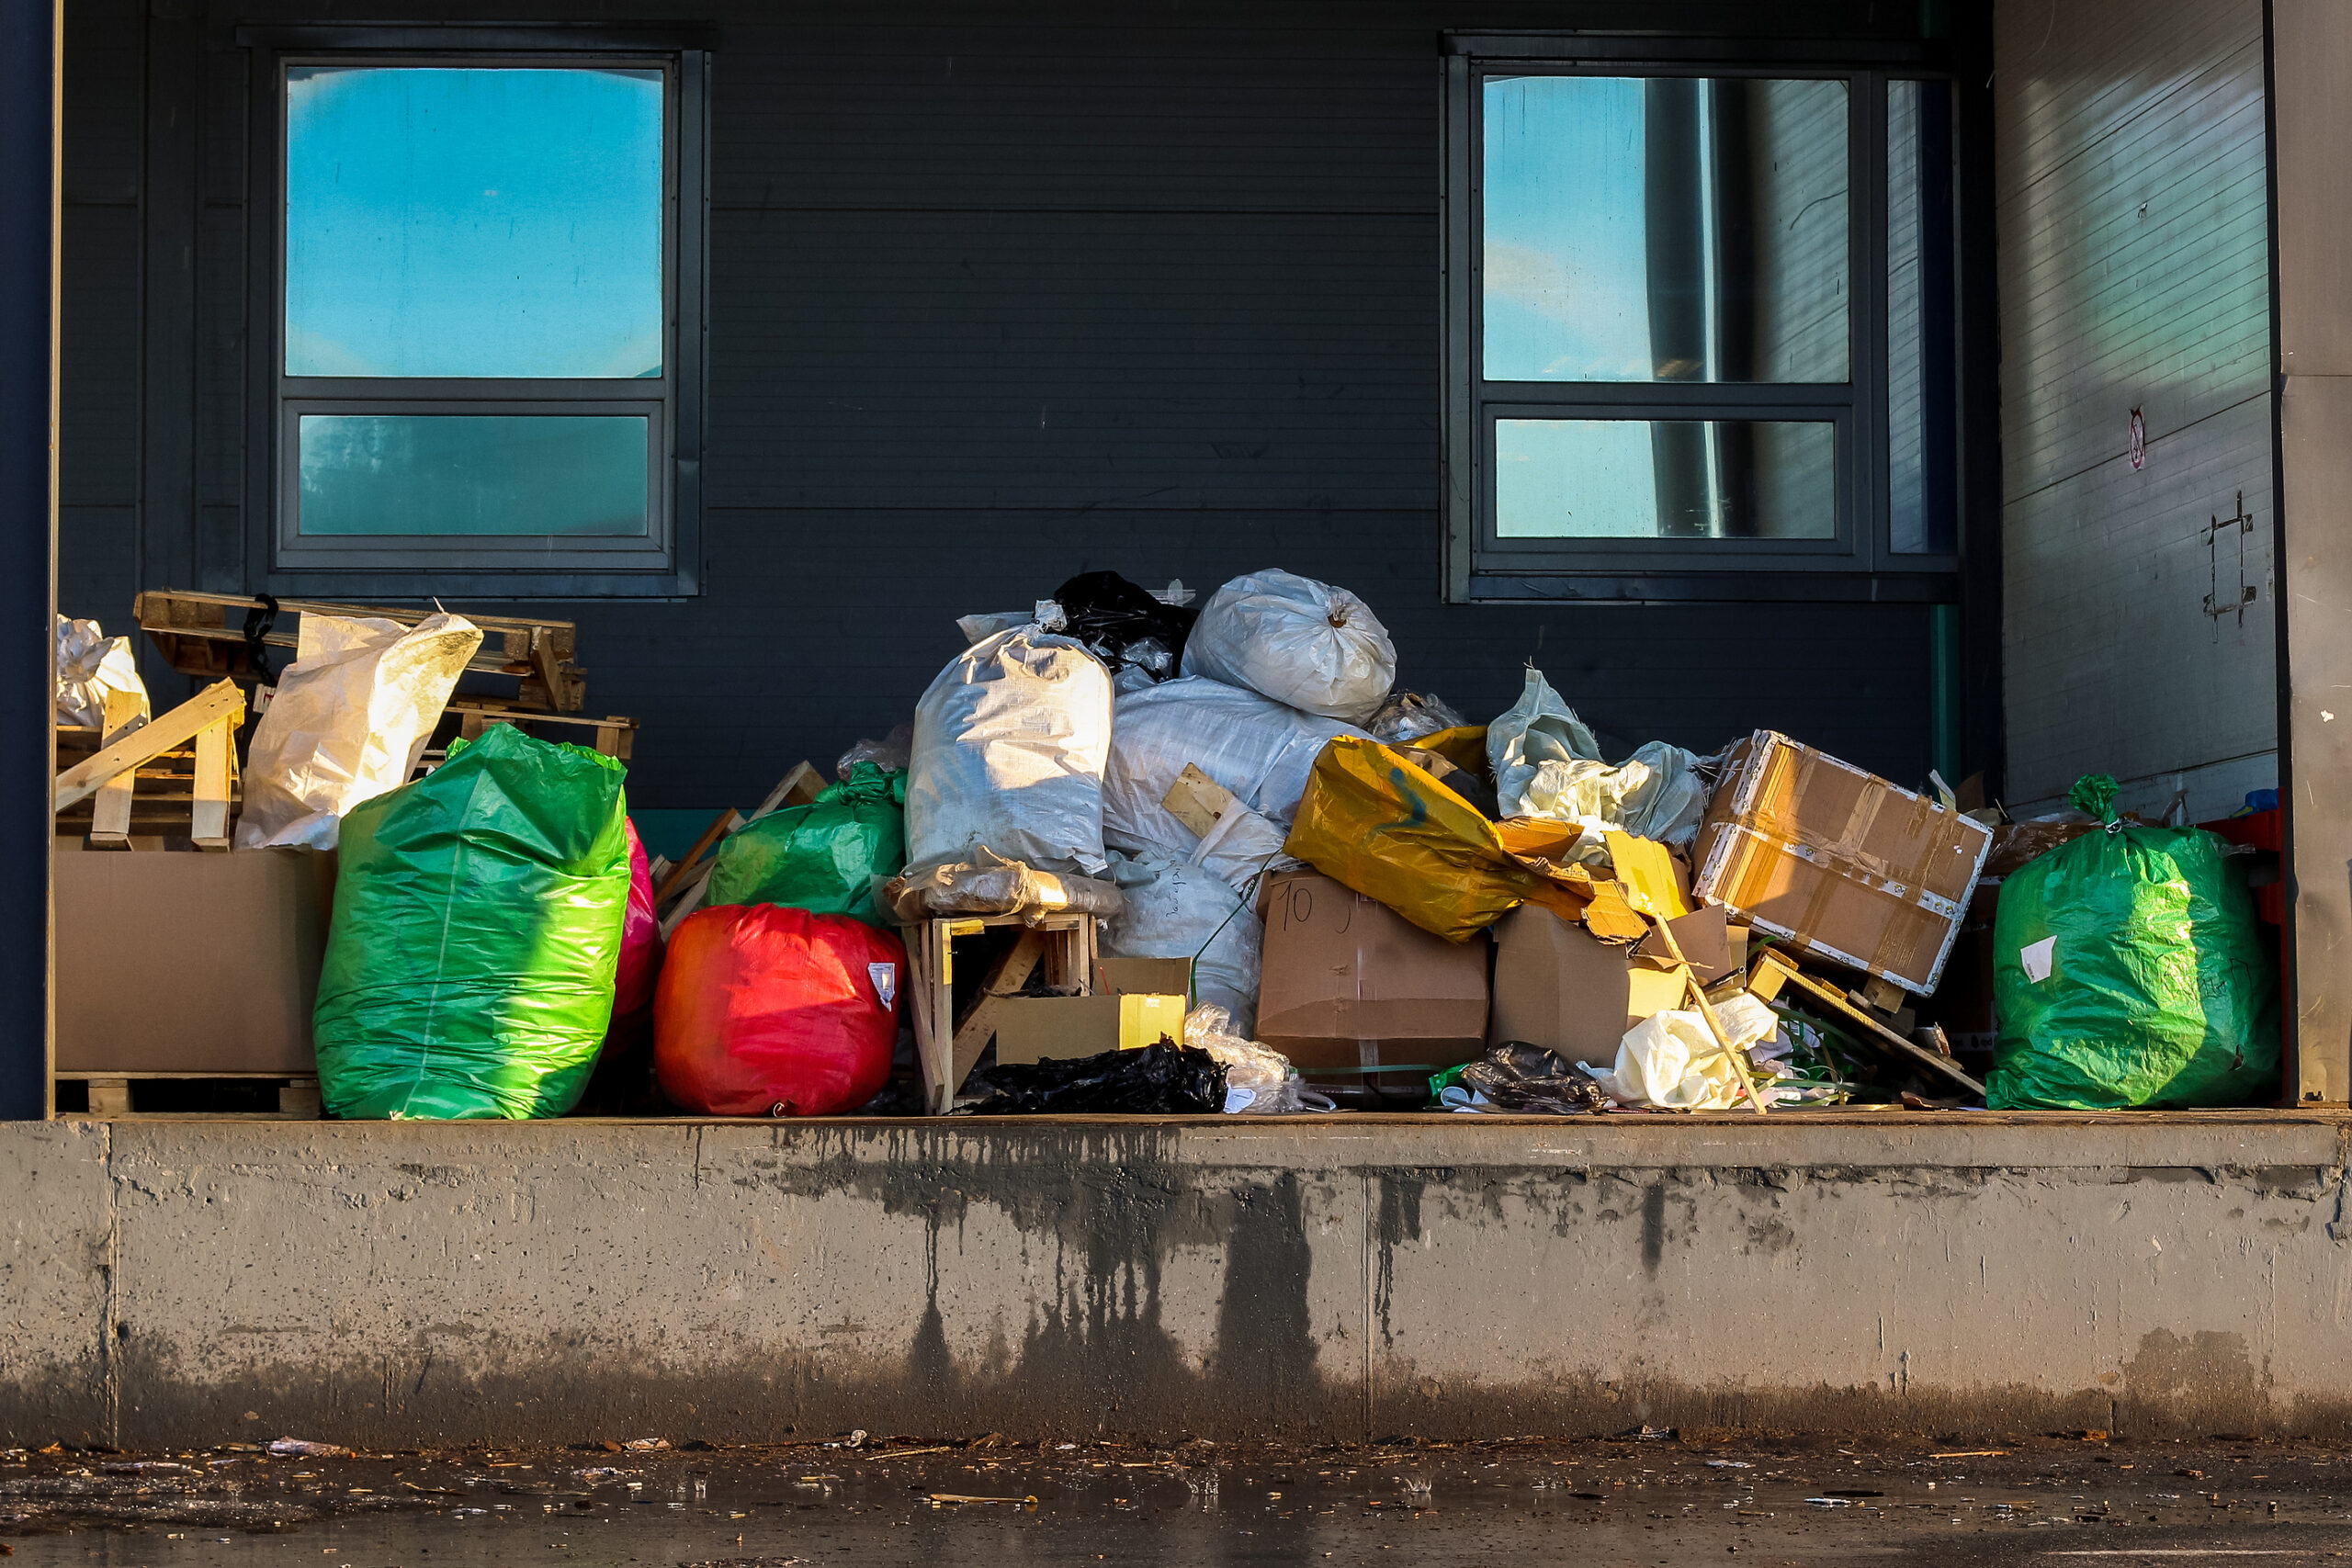 Garbage Removal - Overflowing Plastic Waste Bags, Pile Of Junk